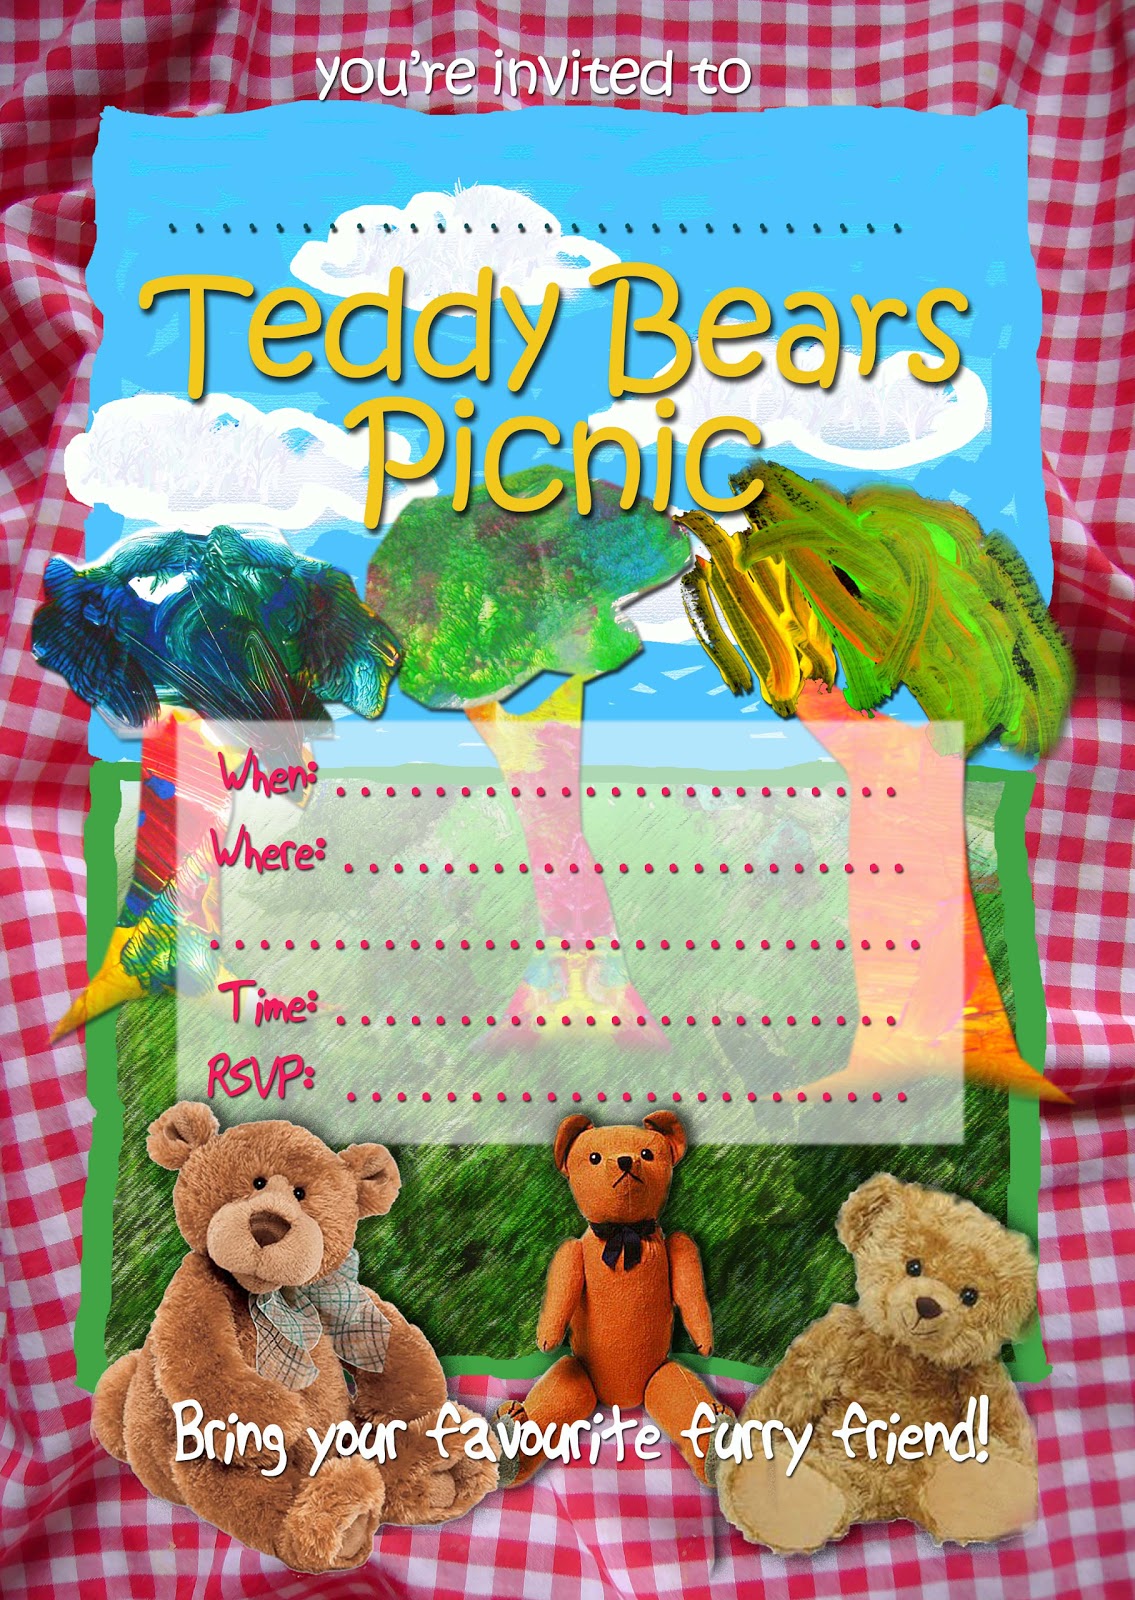 free-kids-party-invitations-teddy-bears-picnic-invitation